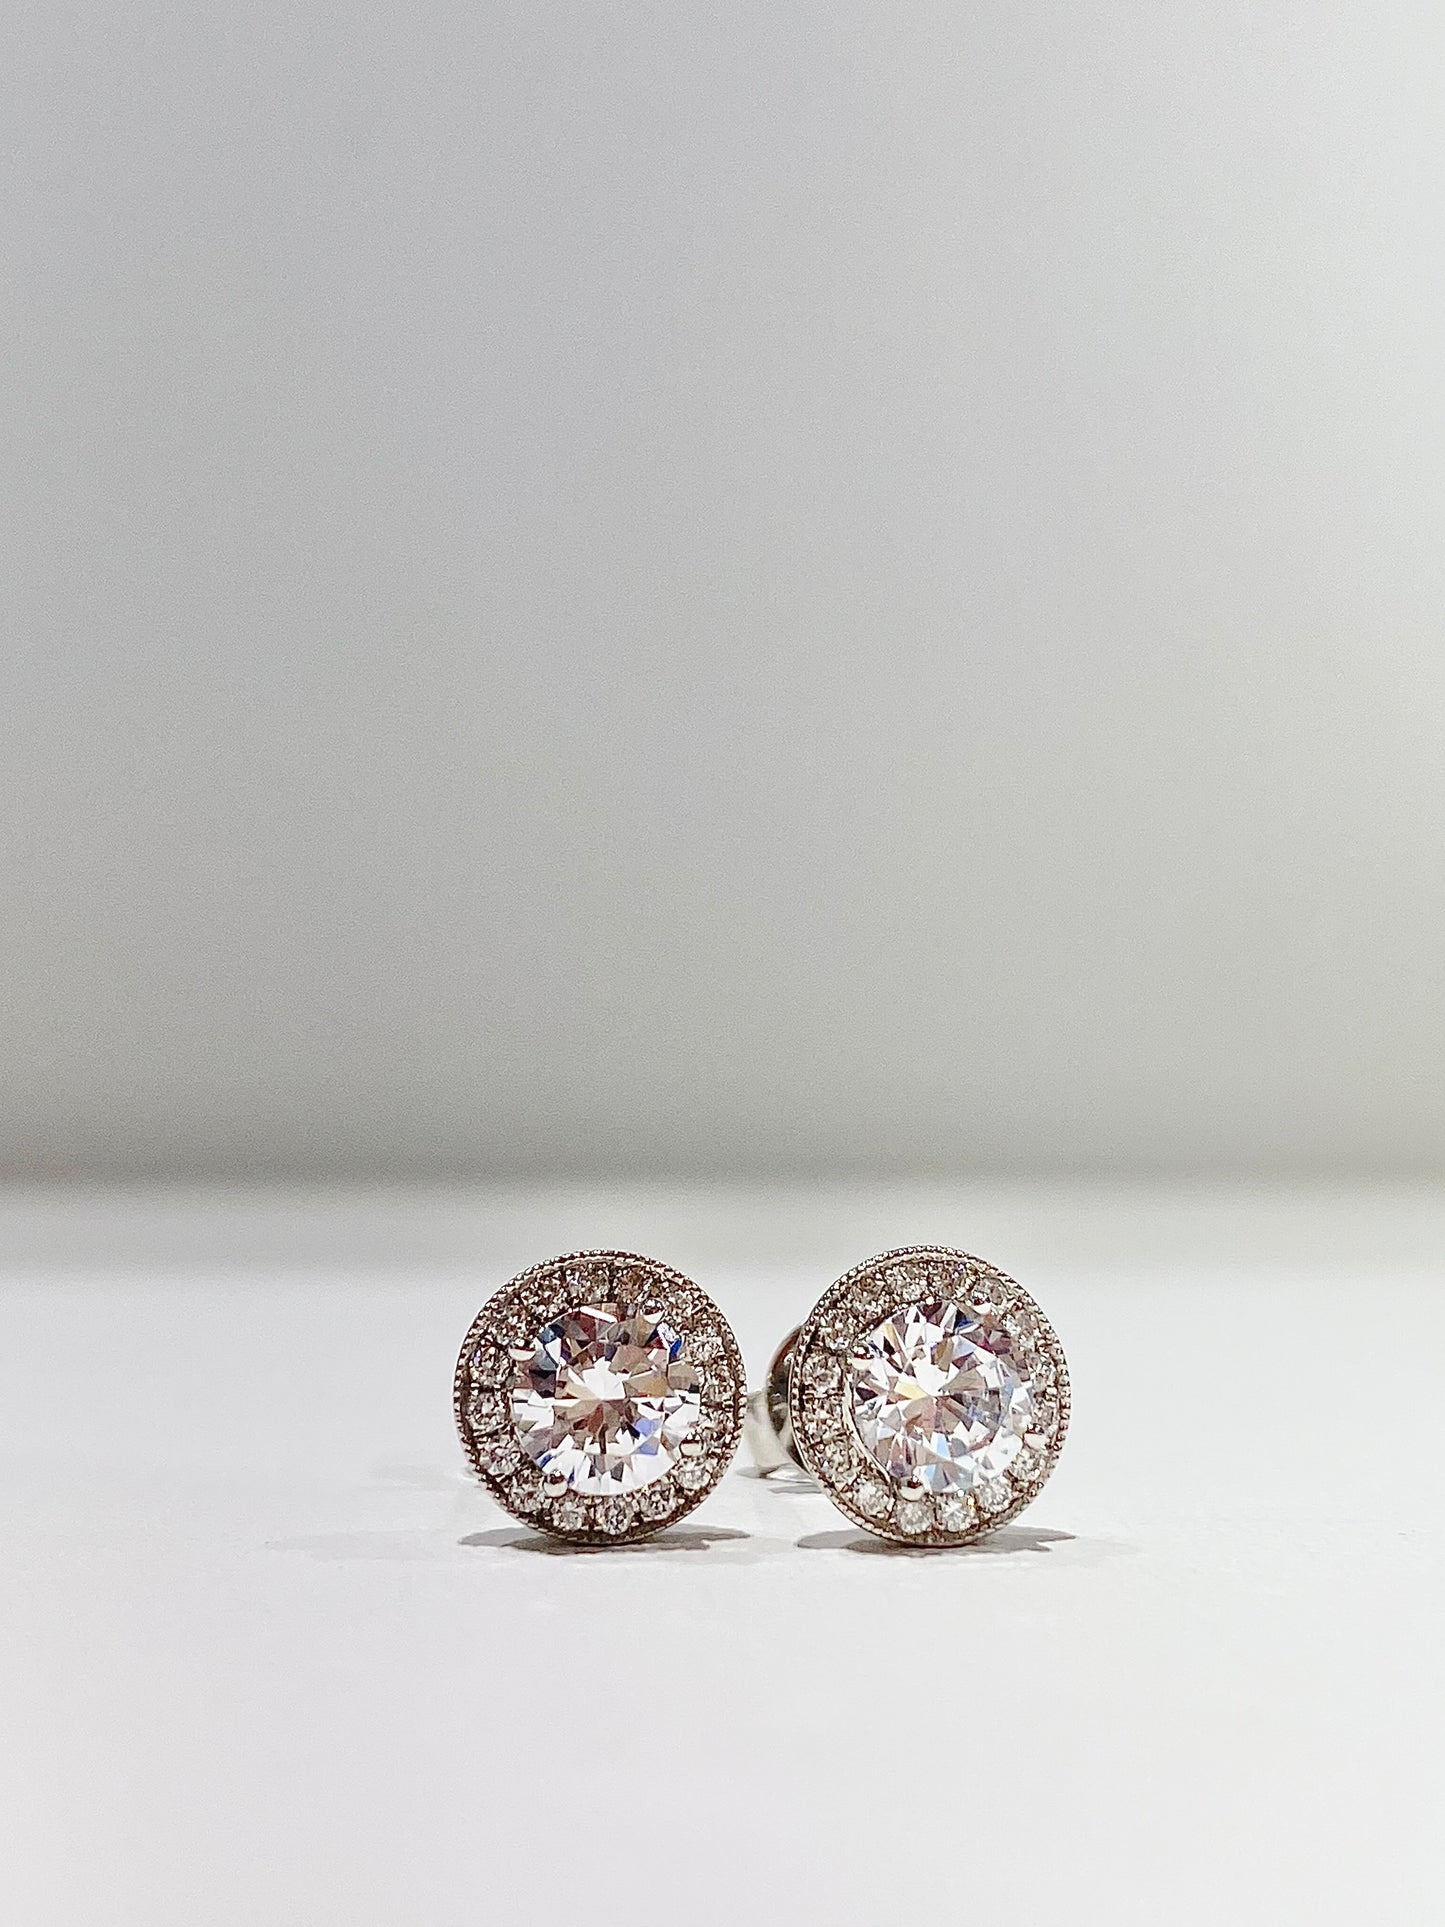 14K White Gold 0.19ct Diamond Halo Earrings with CZ center - Roset